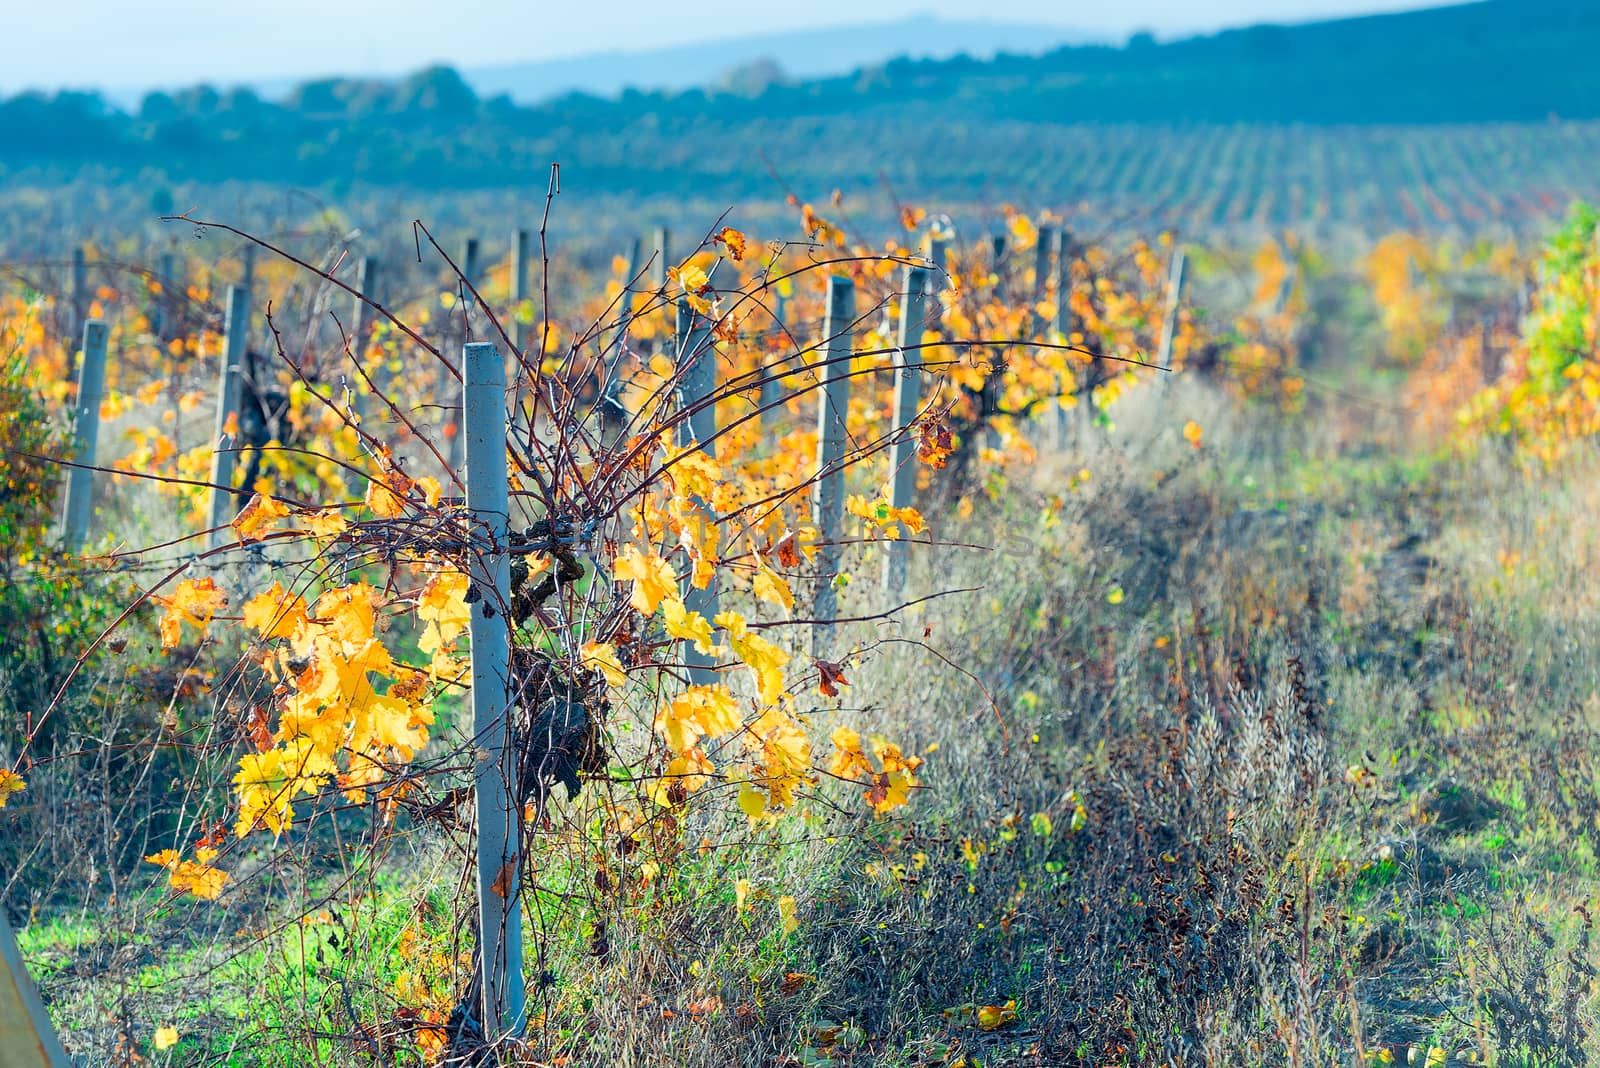 Field vineyard vines after harvest, autumn view